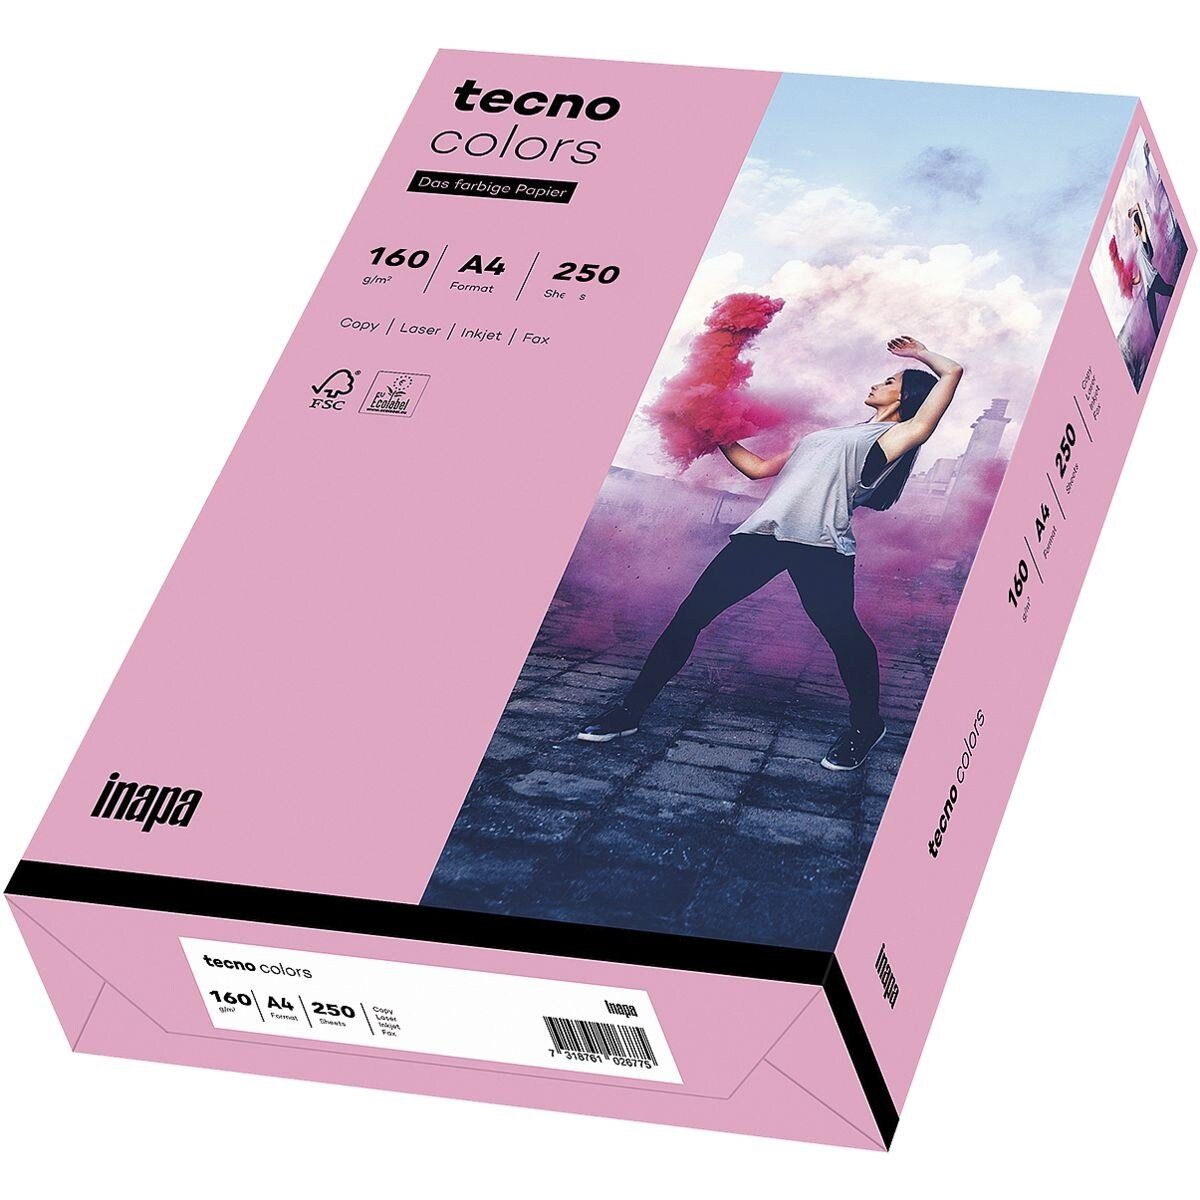 DIN Blatt A4, tecno / Inapa Drucker- Pastellfarben, 160 Rainbow 250 tecno Colors, rosa Format Kopierpapier g/m², und